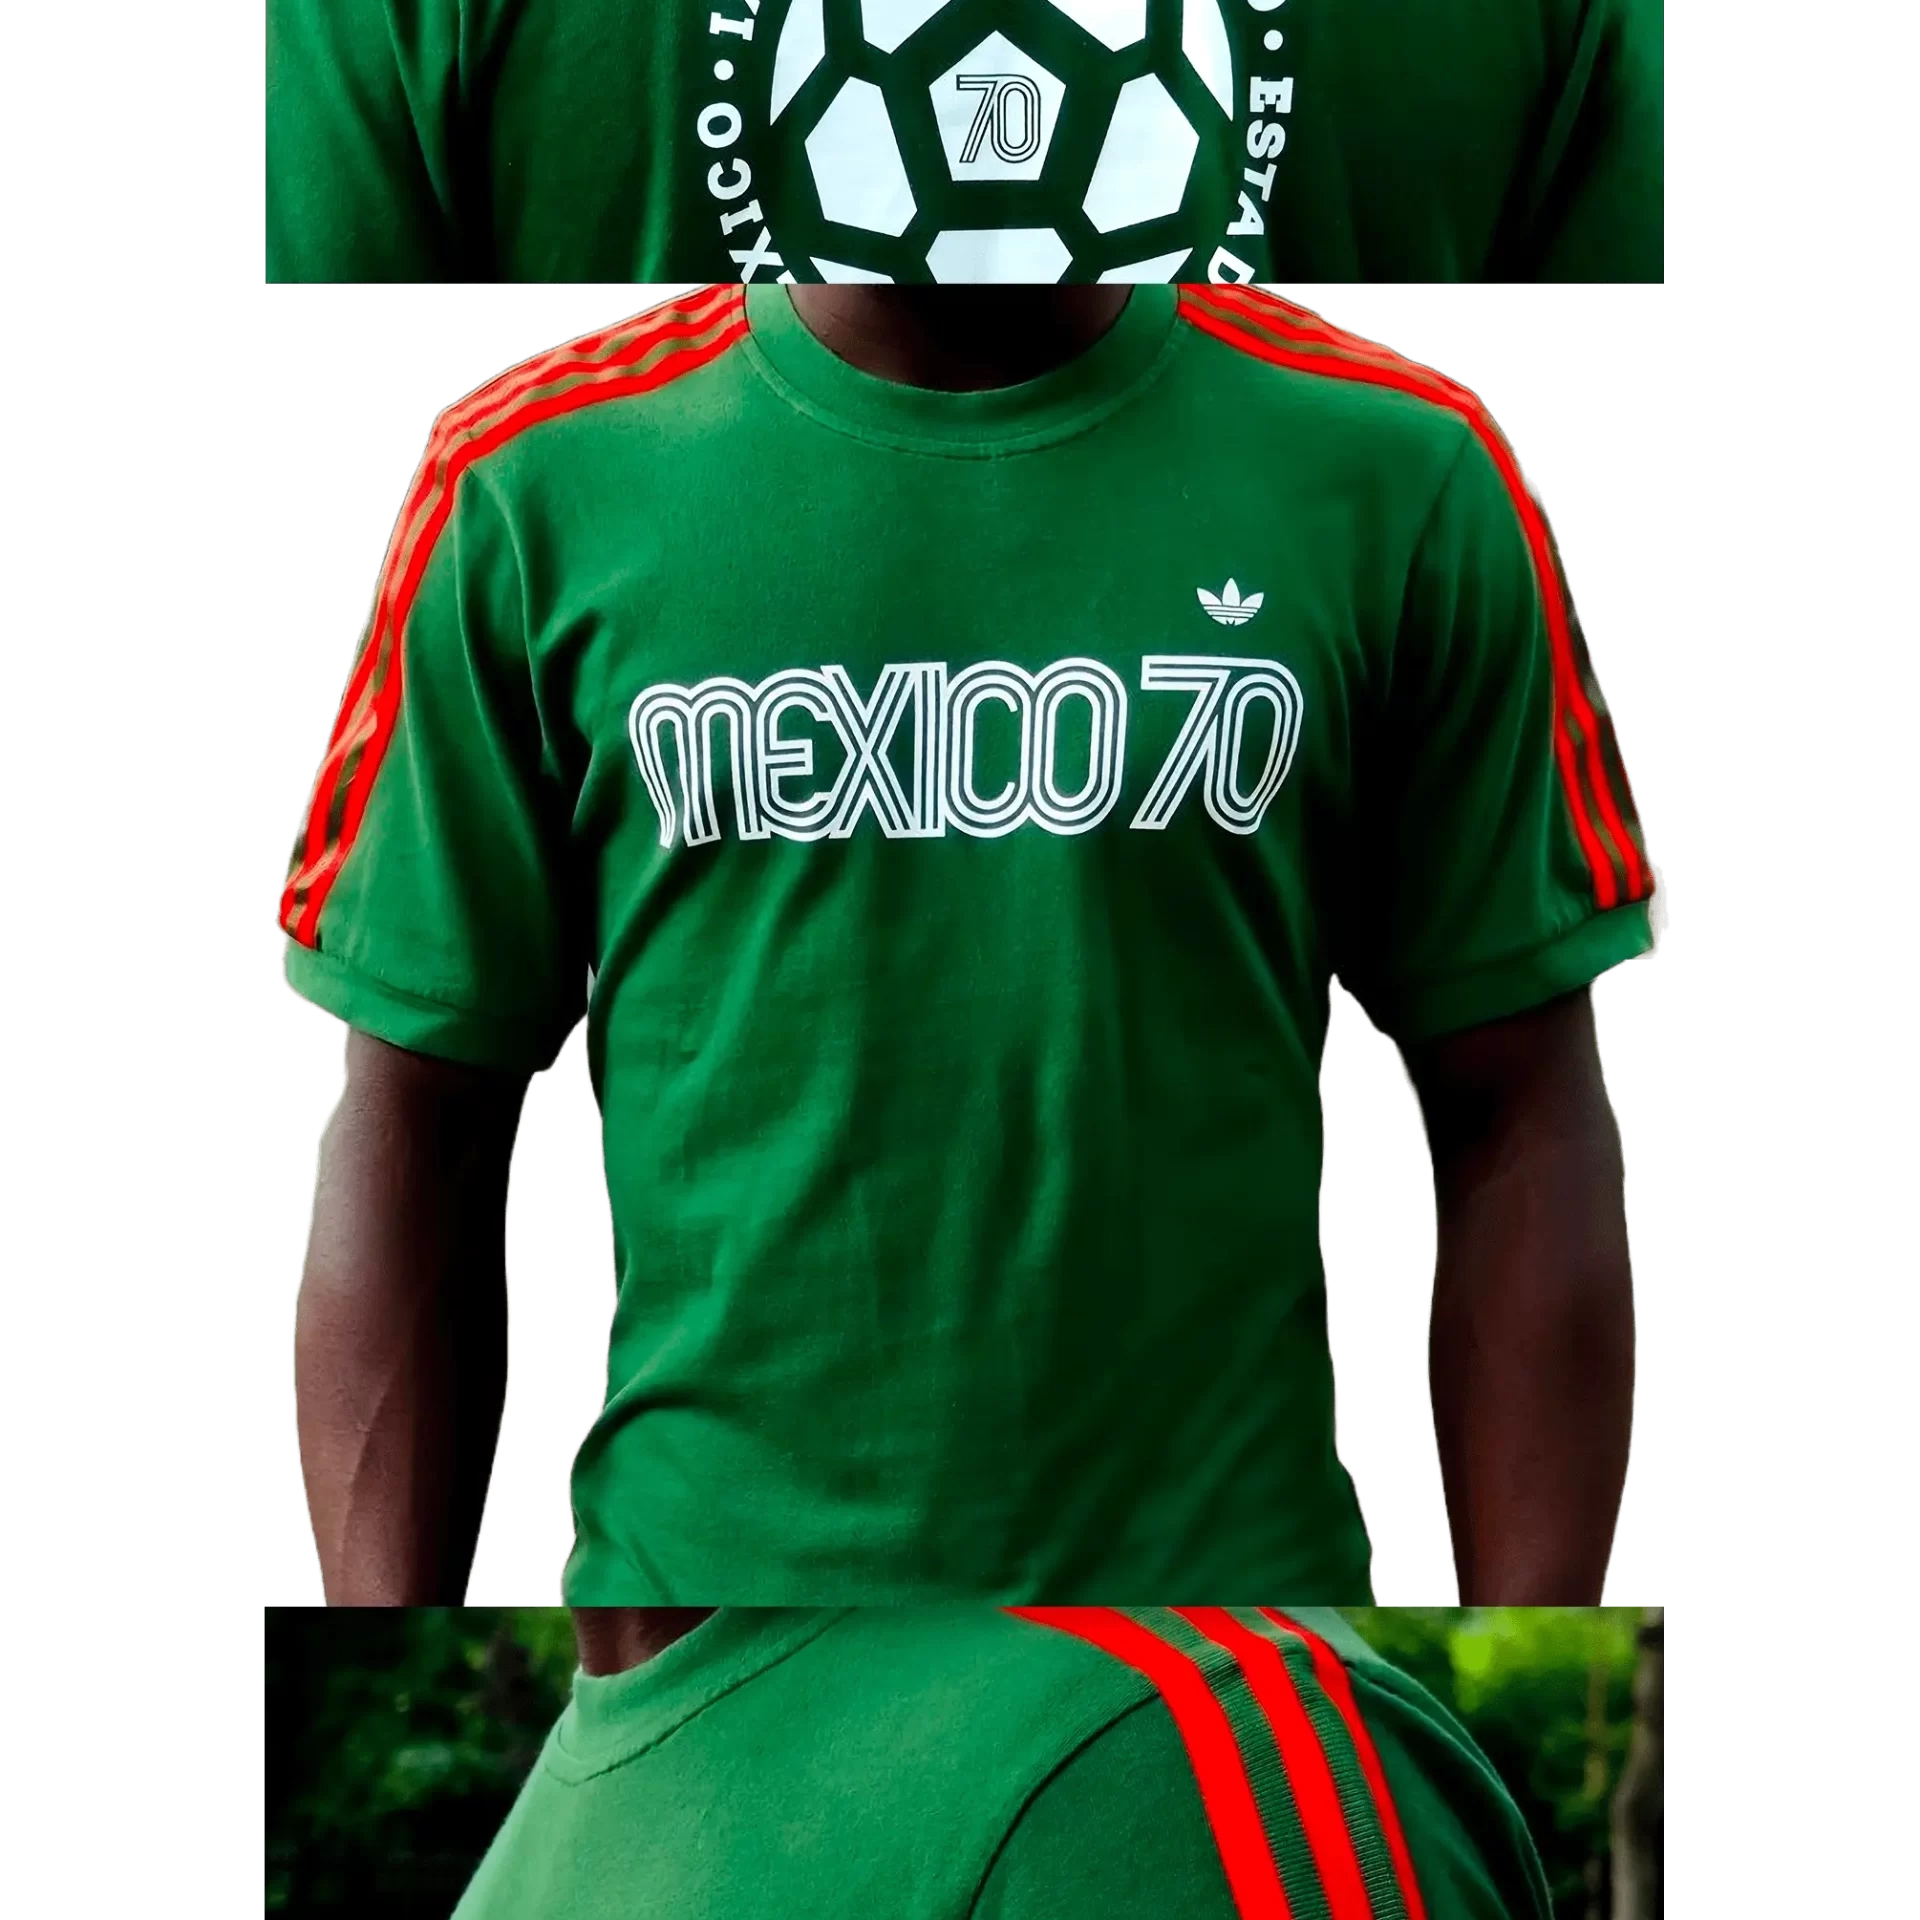 Men's 2005 Mexico '70 T-Shirt by Adidas Originals: Fluid (EnLawded.com file #lmchk72152ip2y124136kg9st)